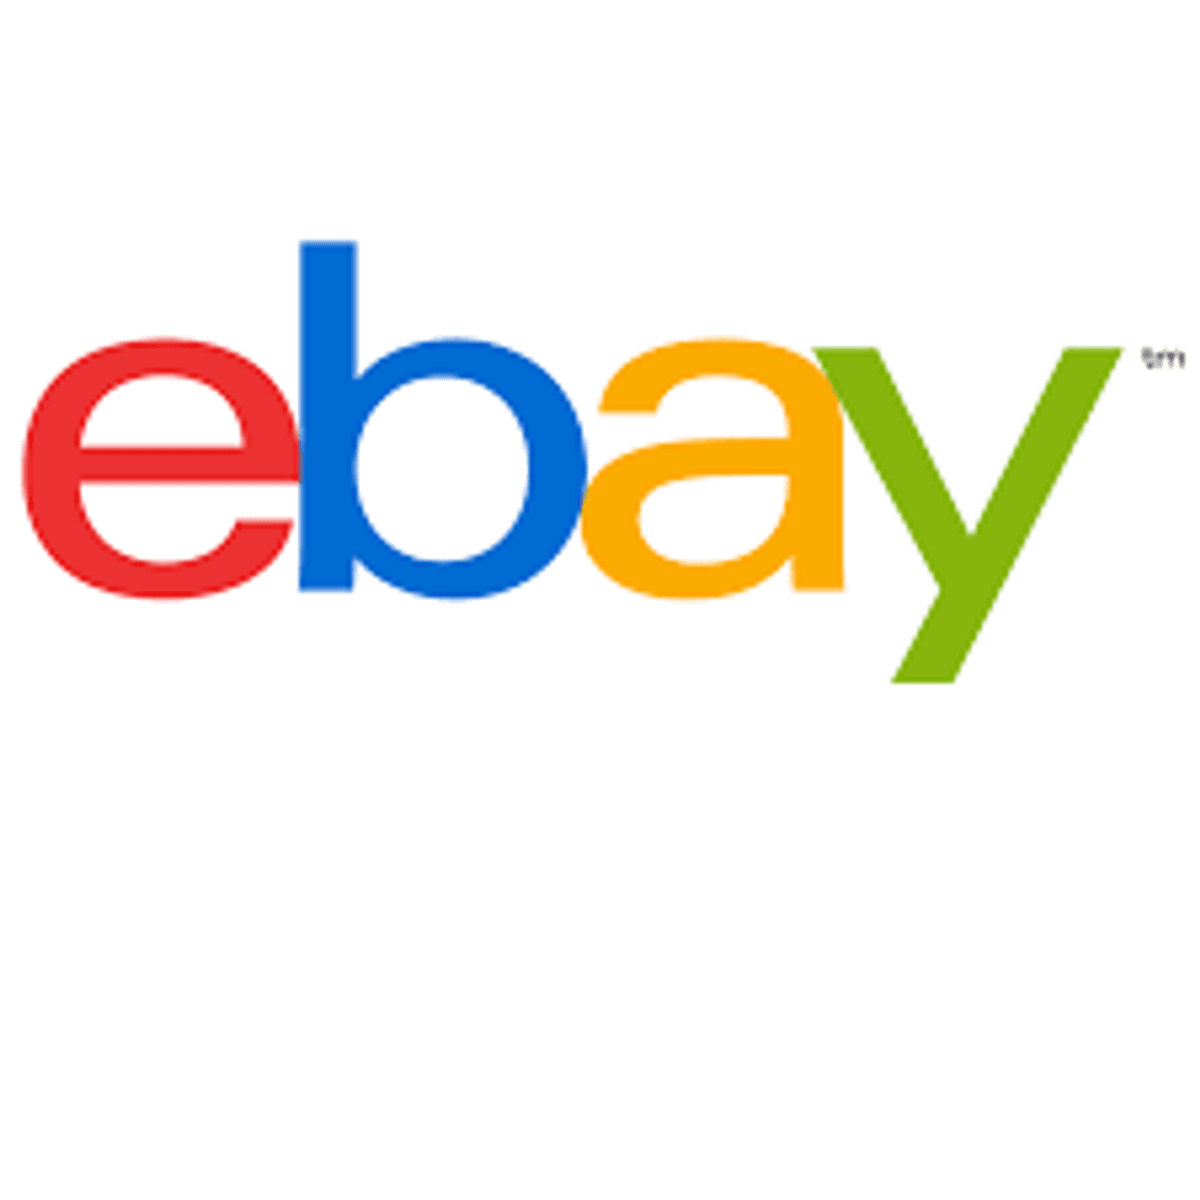 eBay topman Devin Wenig exit na druk Elliott Management image